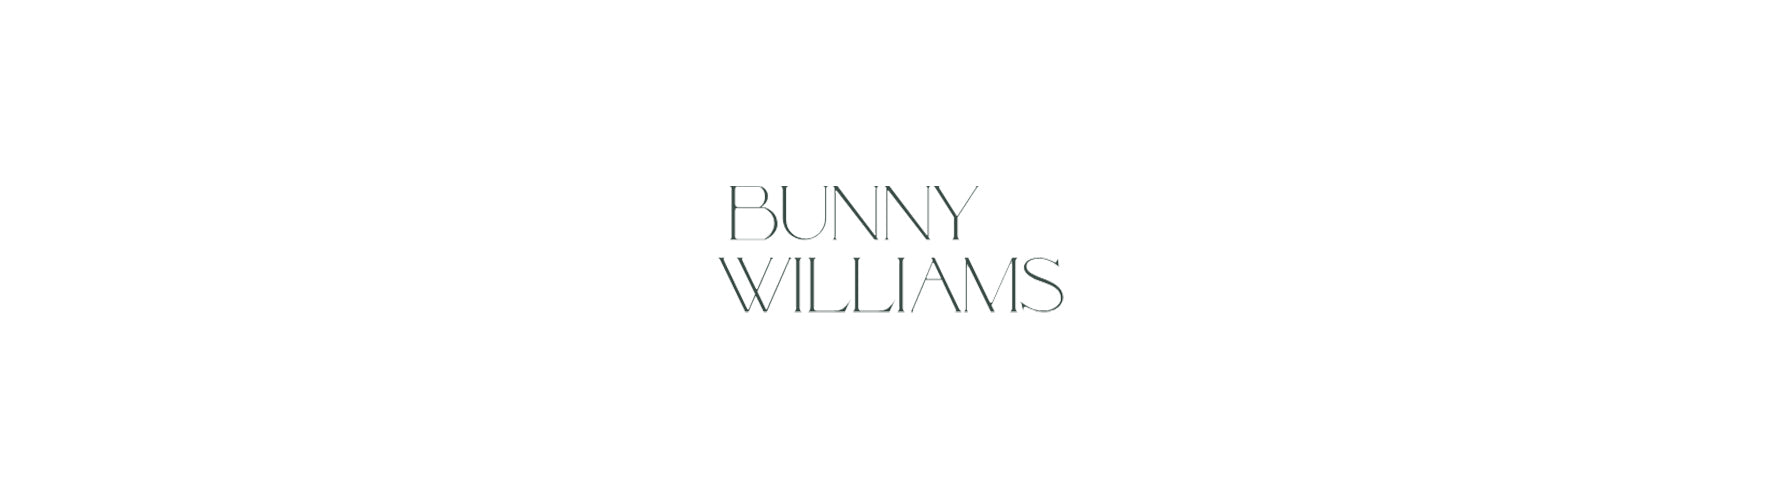 Bunny Williams interior design logo.